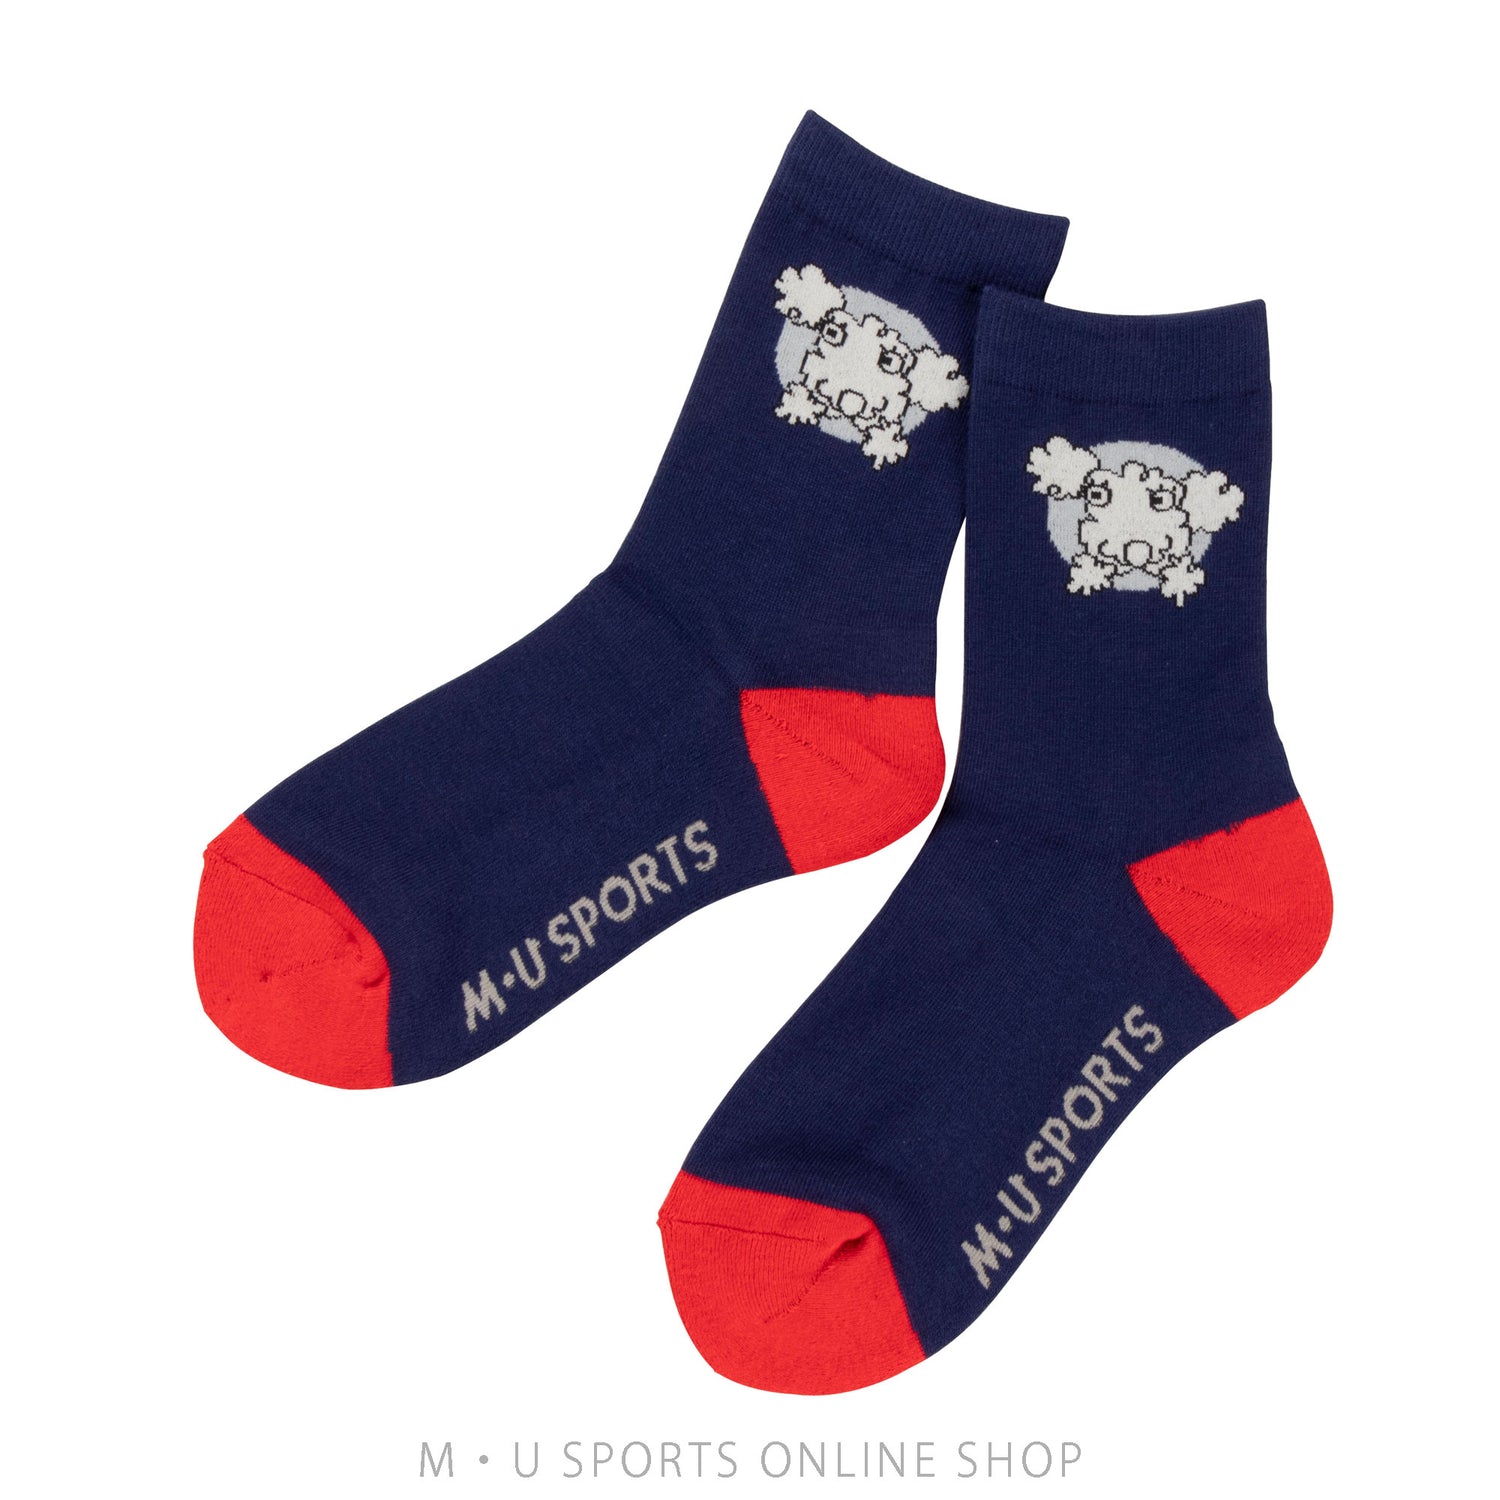 Regular socks (701J6754)